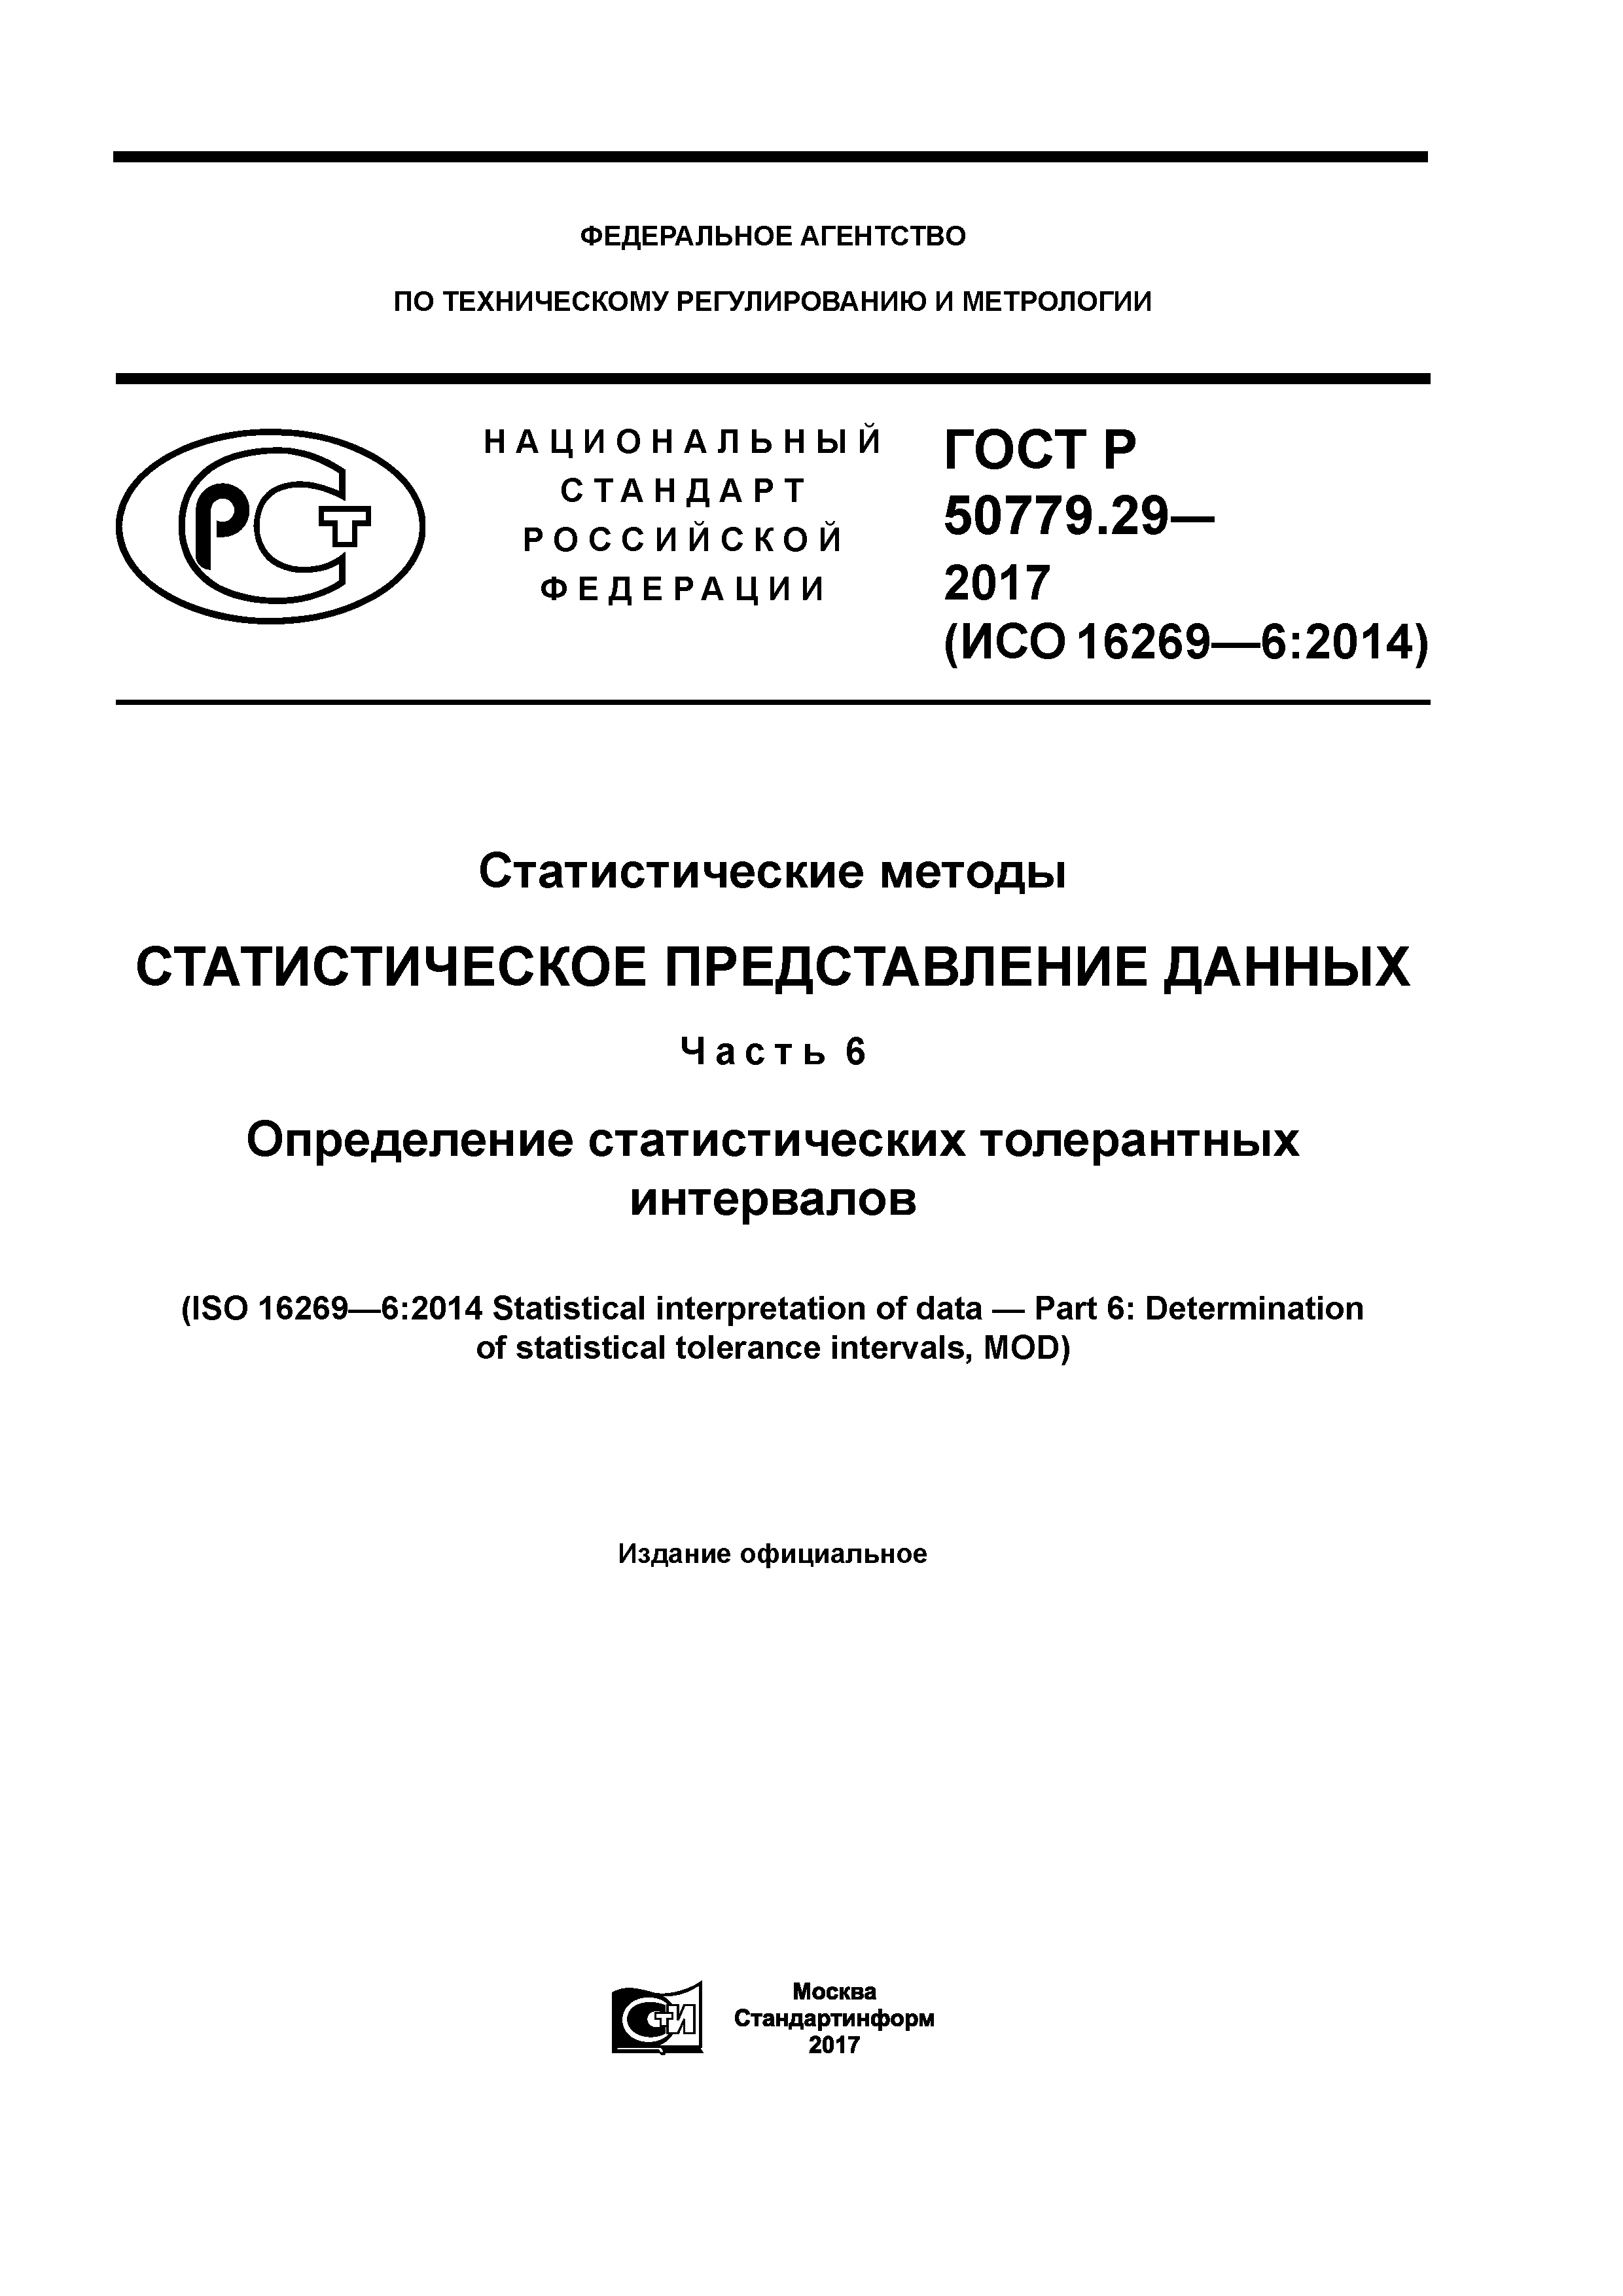 ГОСТ Р 50779.29-2017